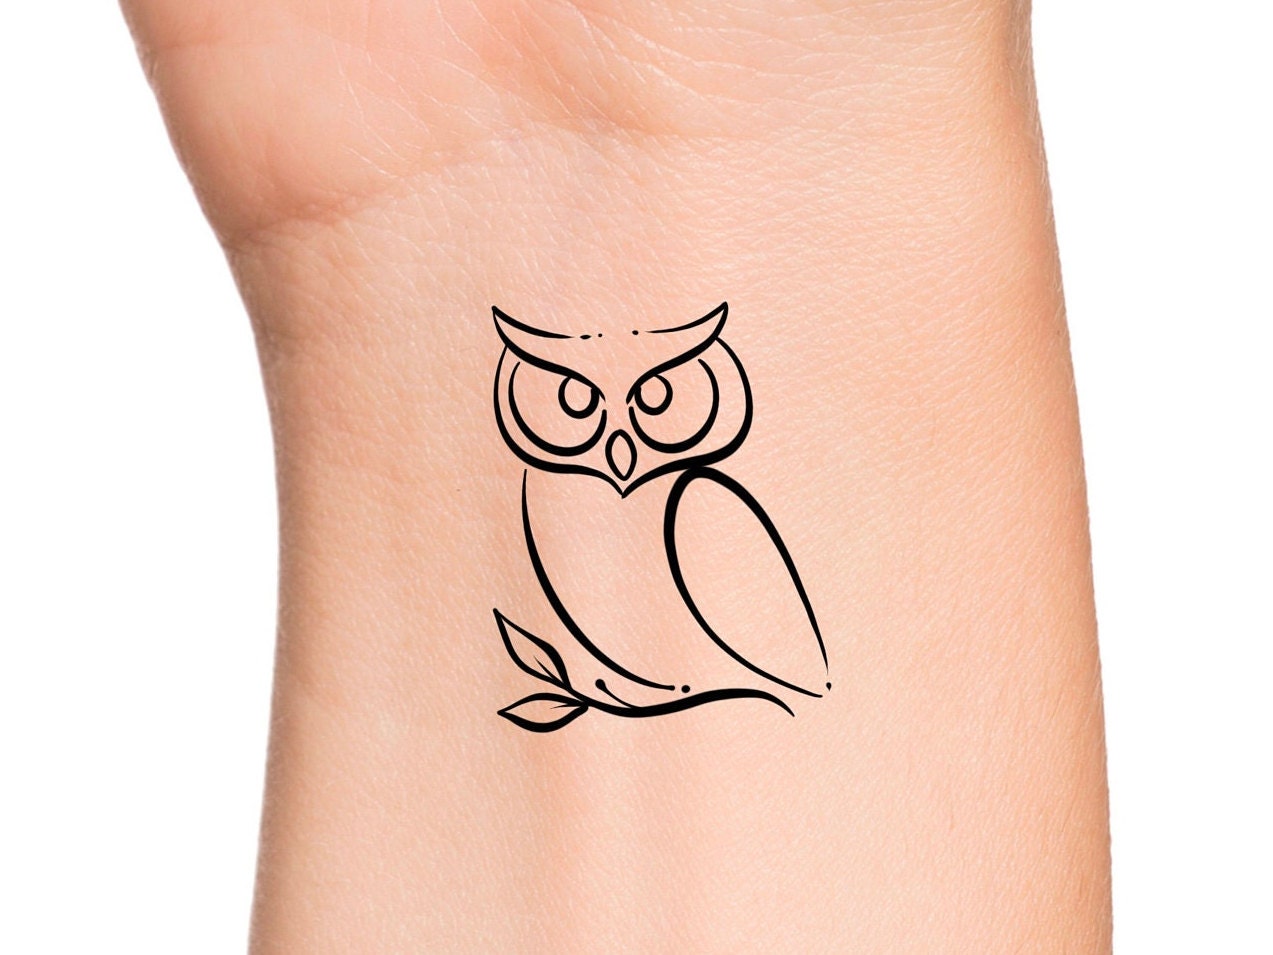 1. Dark owl tattoo designs - wide 8